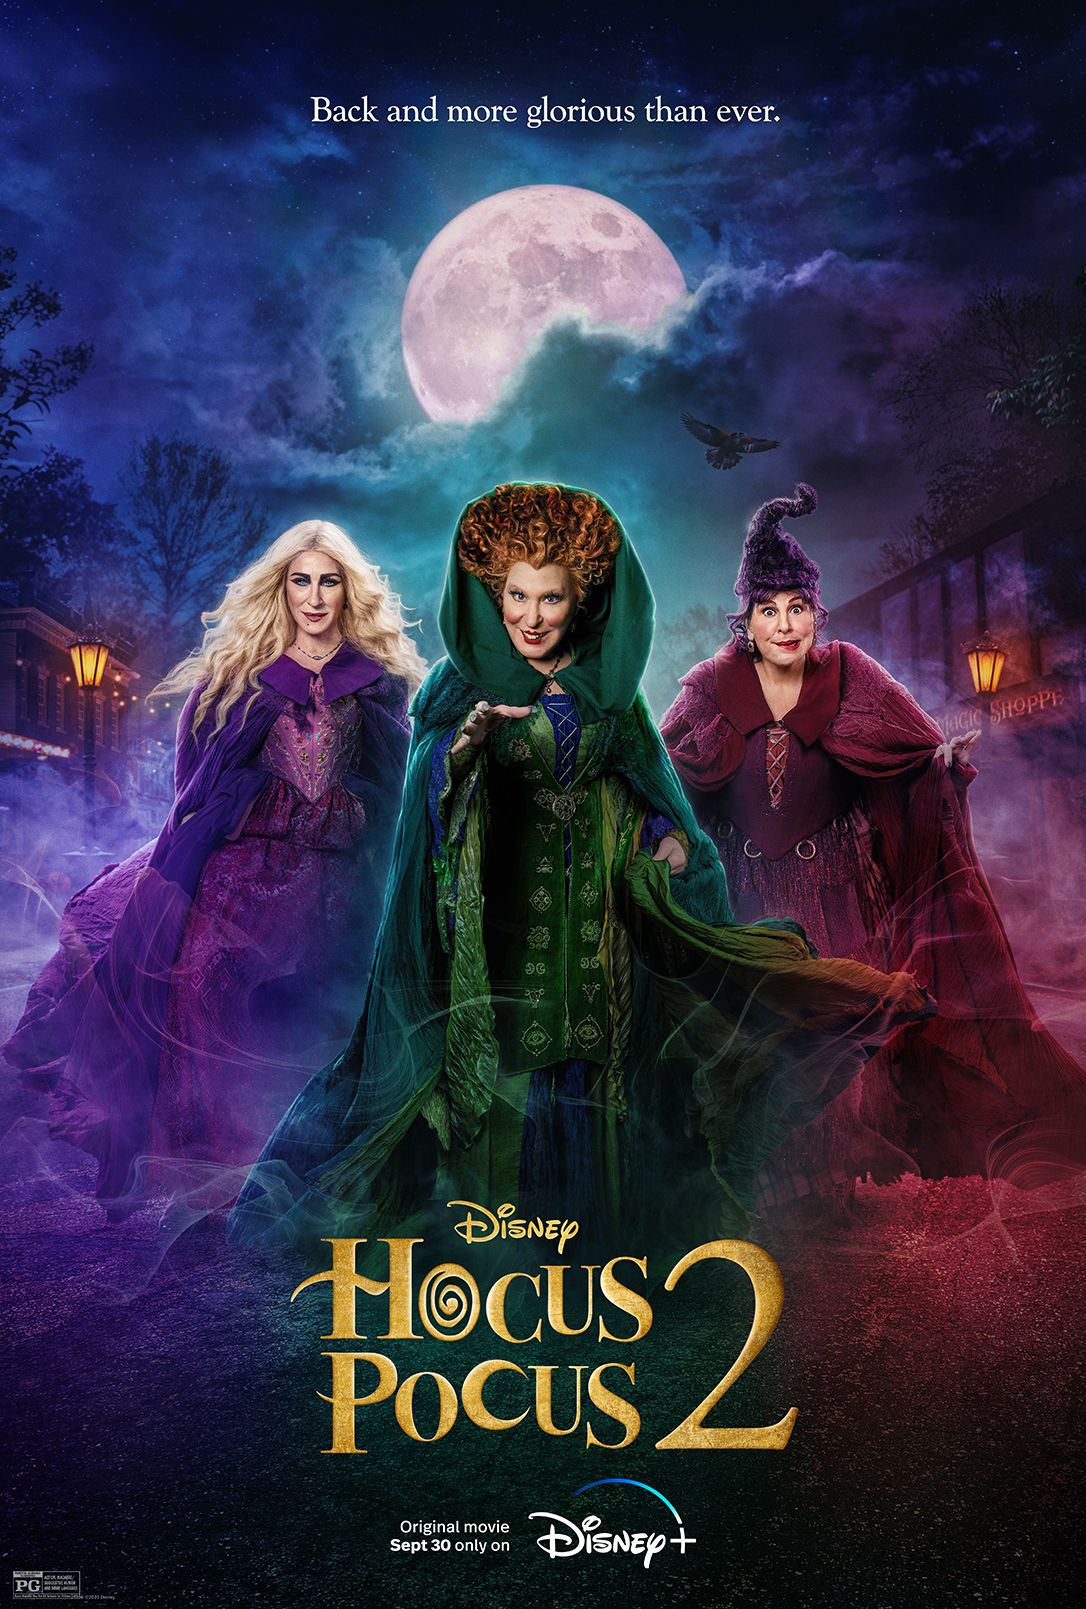 A Bunch of Hocus Pocus | Hocus pocus, Disney art, Halloween art